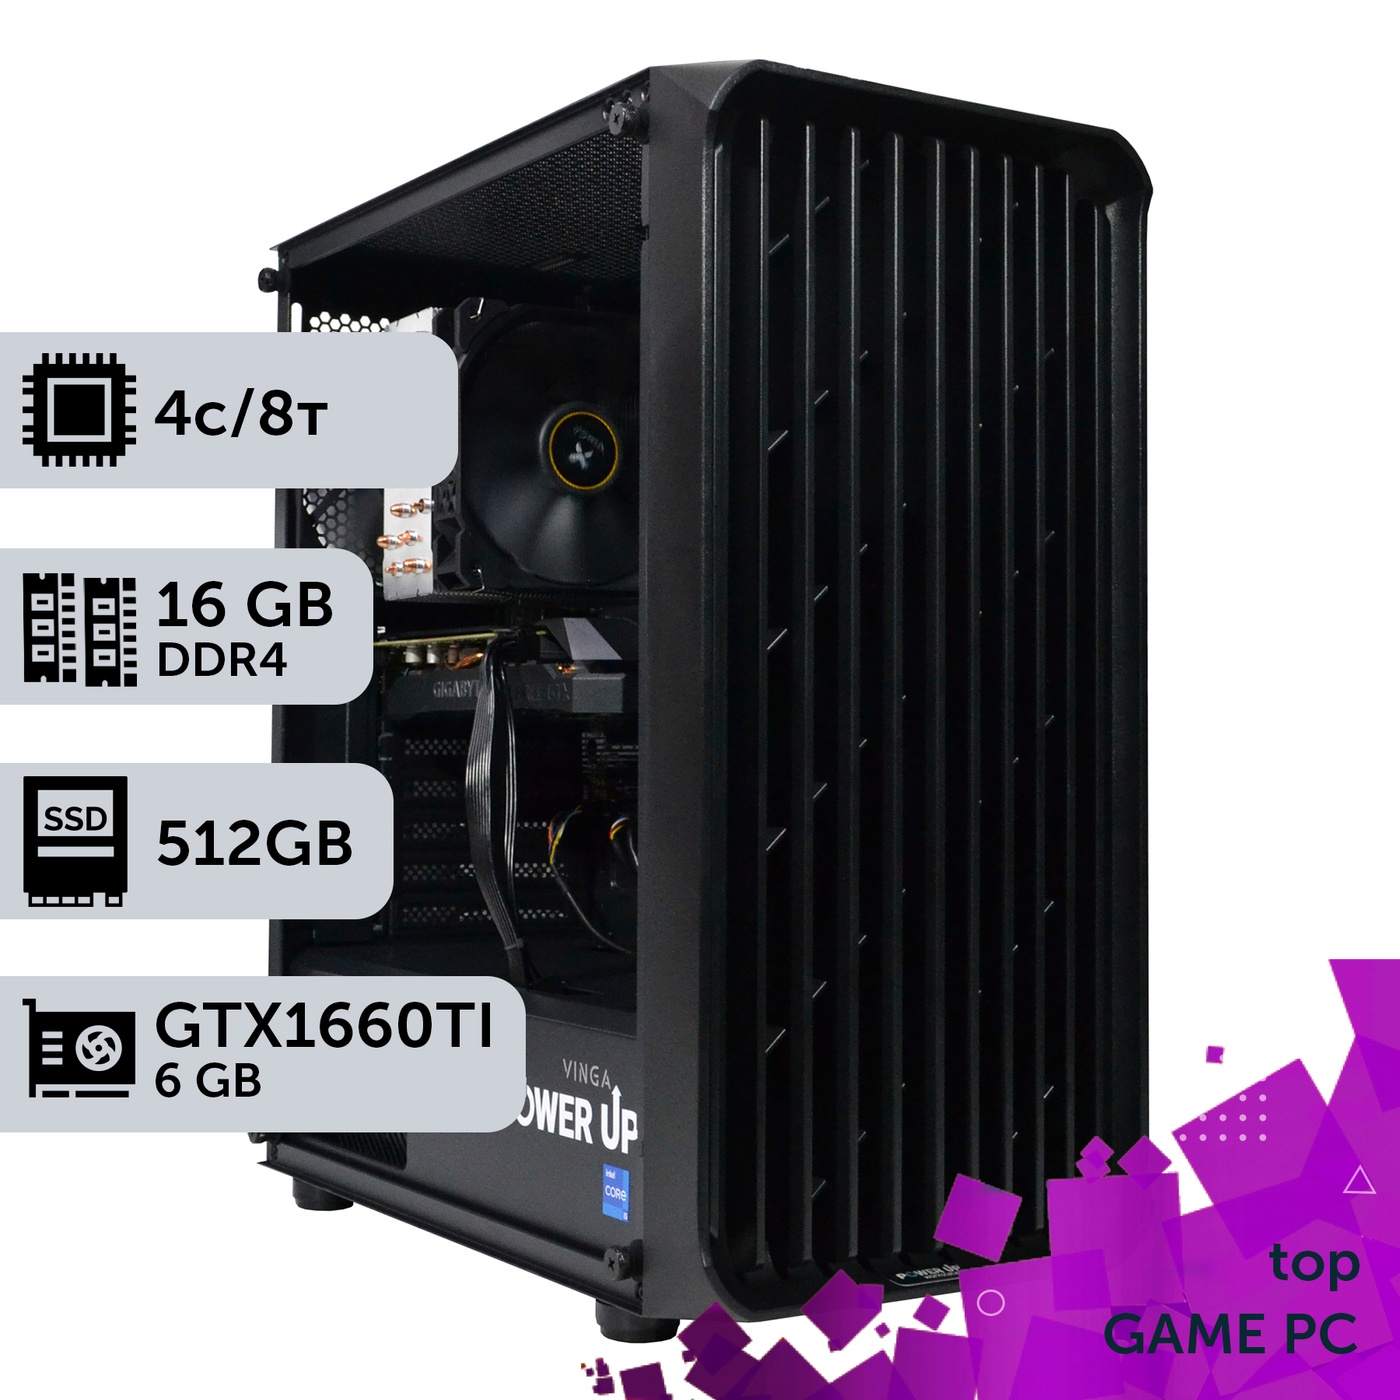 Игровой компьютер GamePC TOP #137 Core i3 12100F/16 GB/SSD 512GB/GeForce GTX 1660Ti 6GB